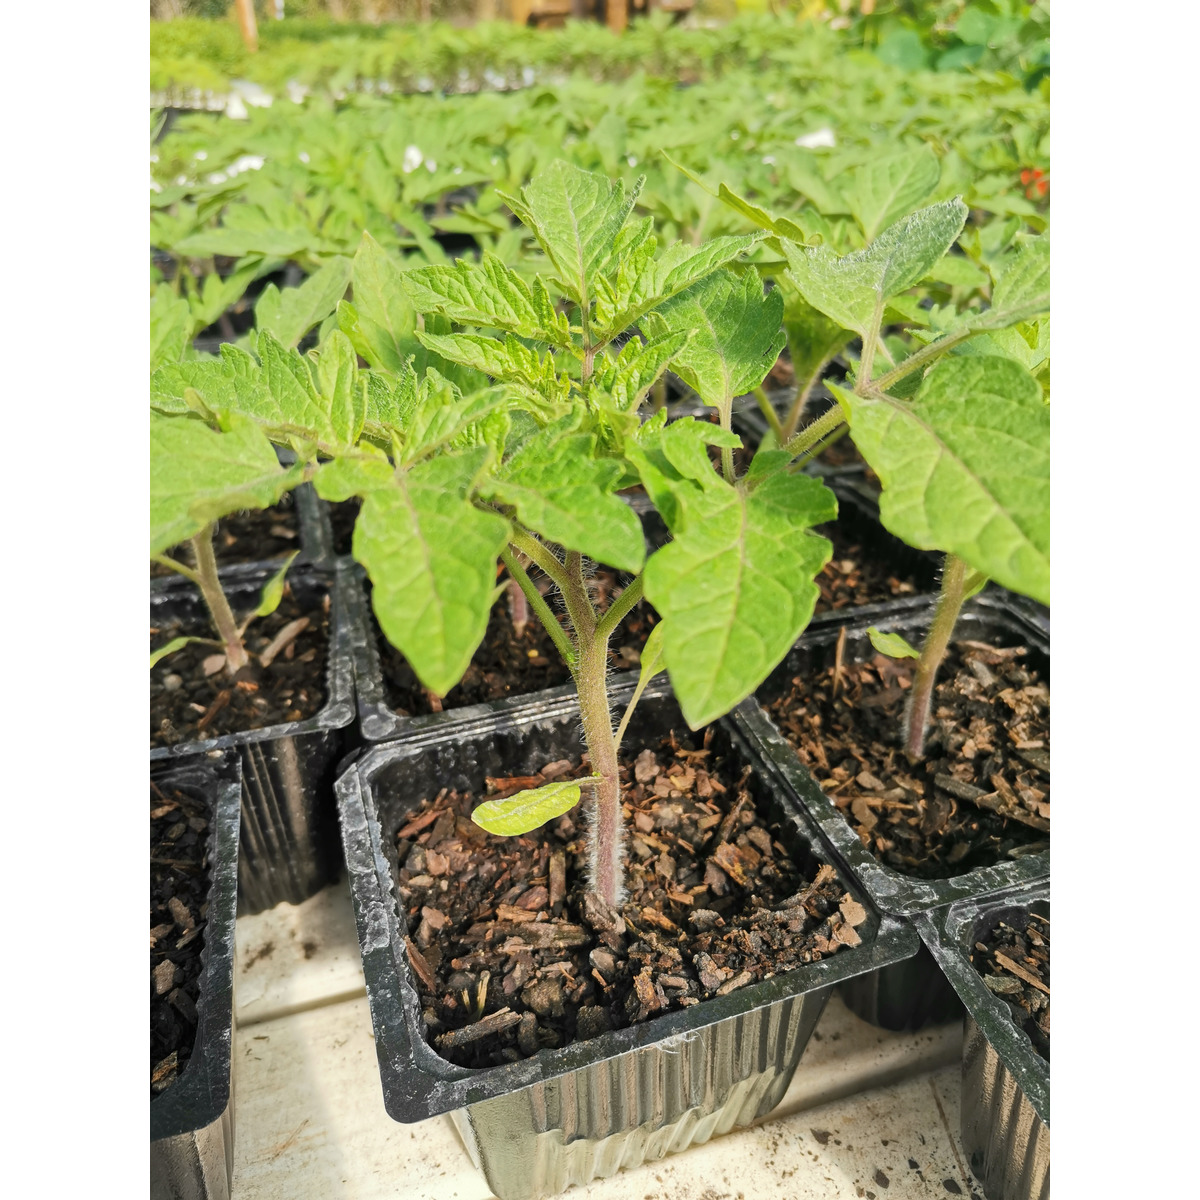 Tomato Seedling - Petula (improved beefsteak) 